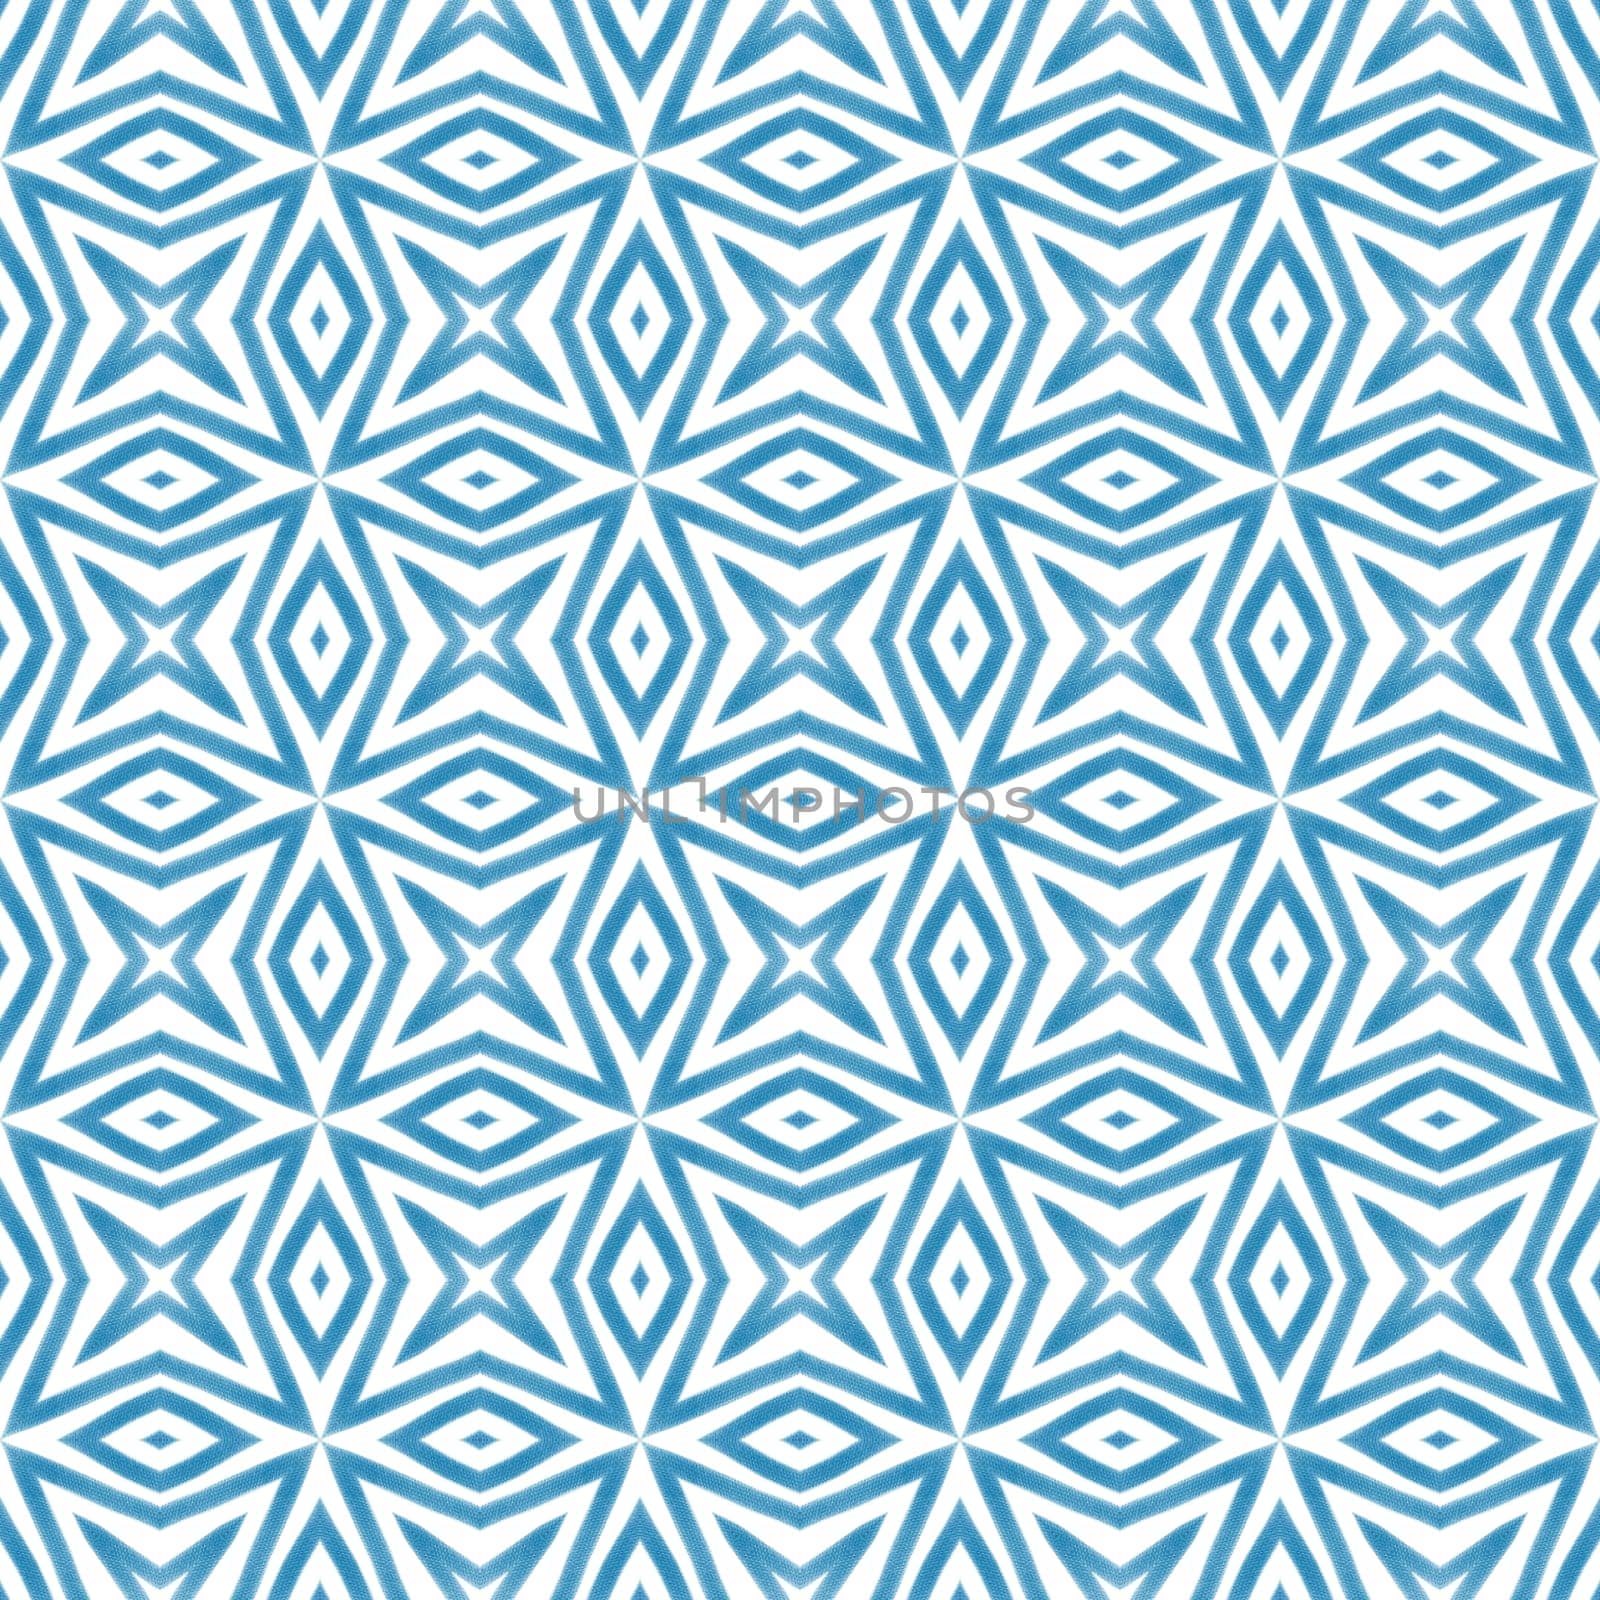 Mosaic seamless pattern. Blue symmetrical by beginagain